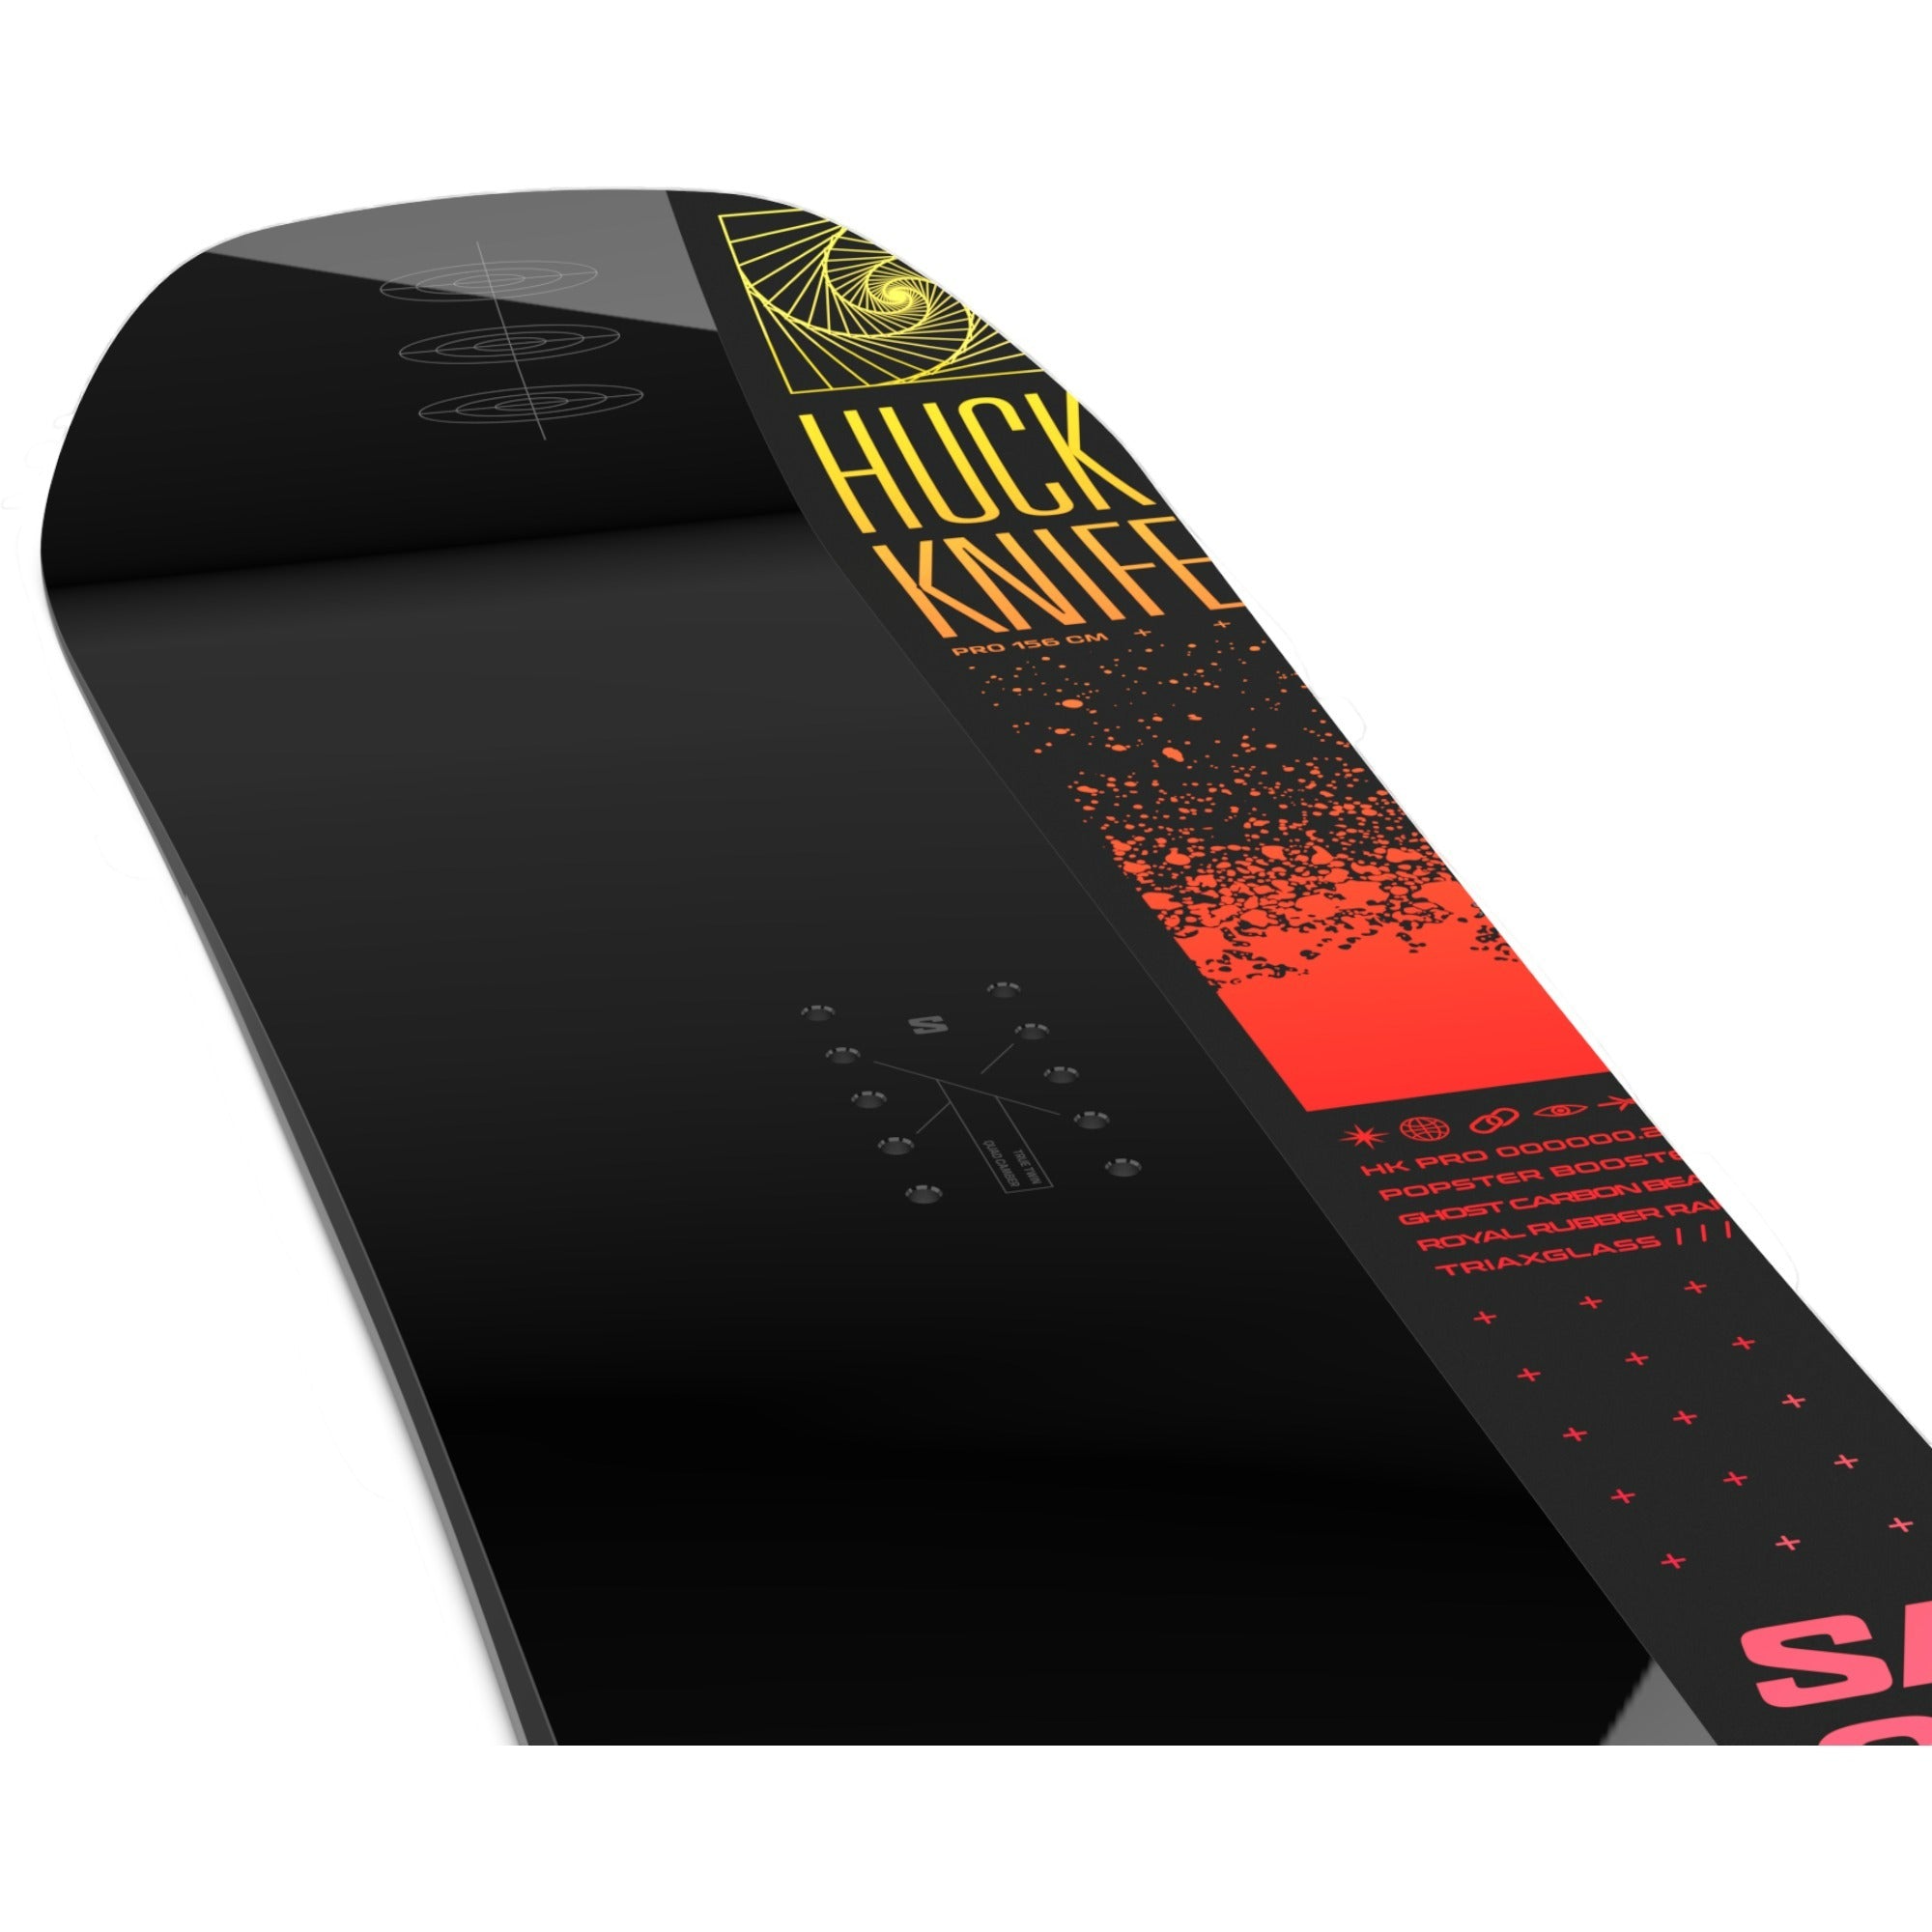 Salomon Huck Knife Pro Men Snowboard – Oberson